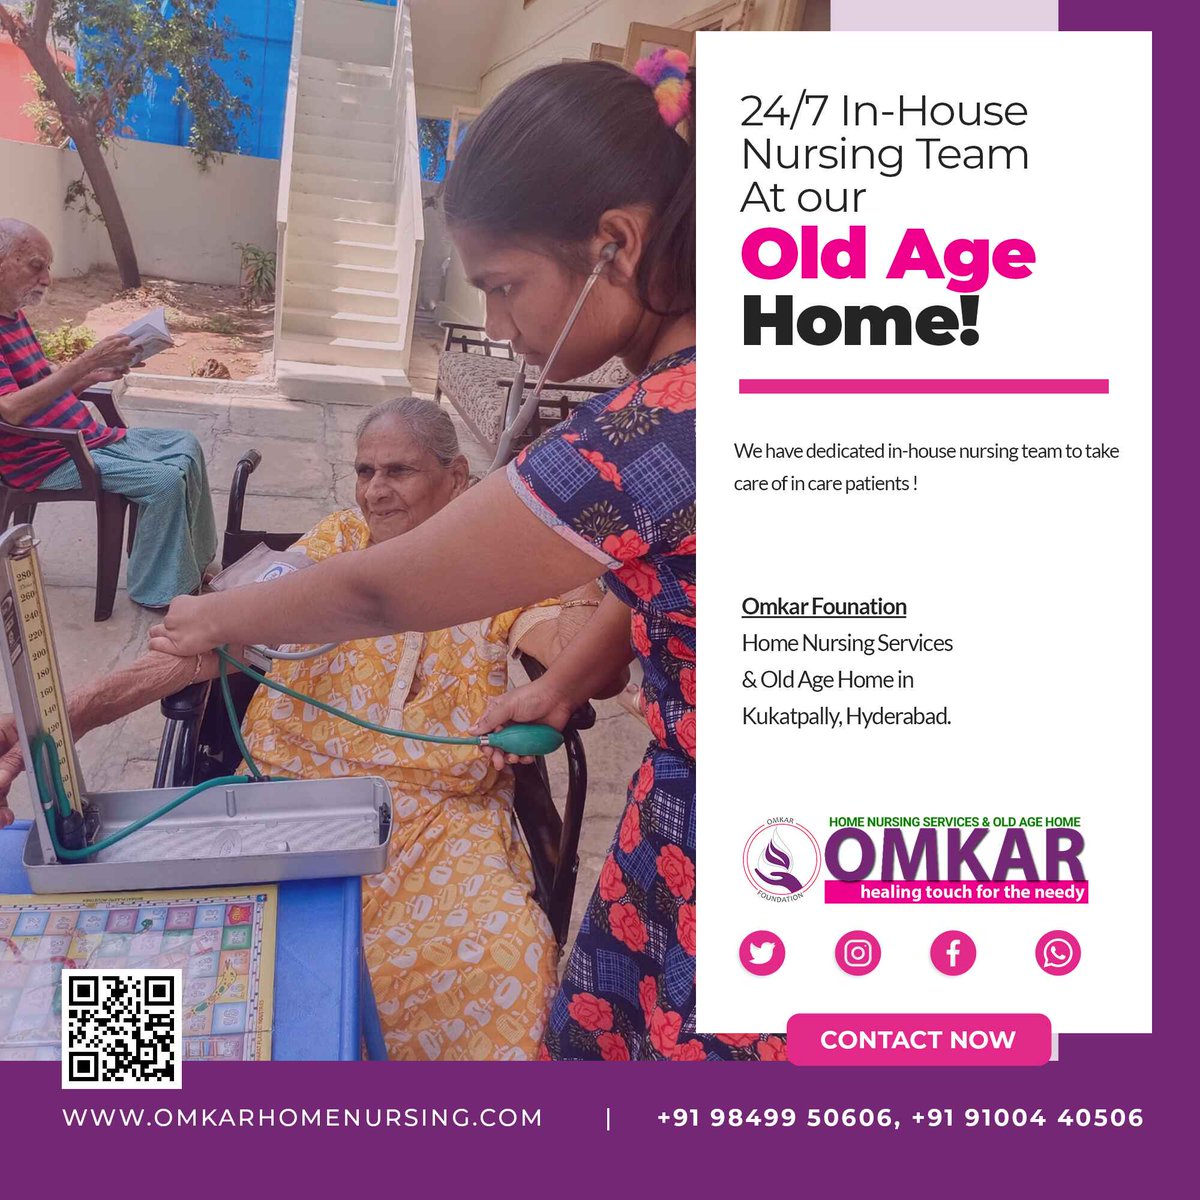 24/7 in-house Nursing Care Team at our Omkar Old Age Home.
#homenursing #homenursingcare #oldagehome #elderlycare #homecareservices #caretaker #caregiver #retirementhome #nursinghome #postsurgerycare